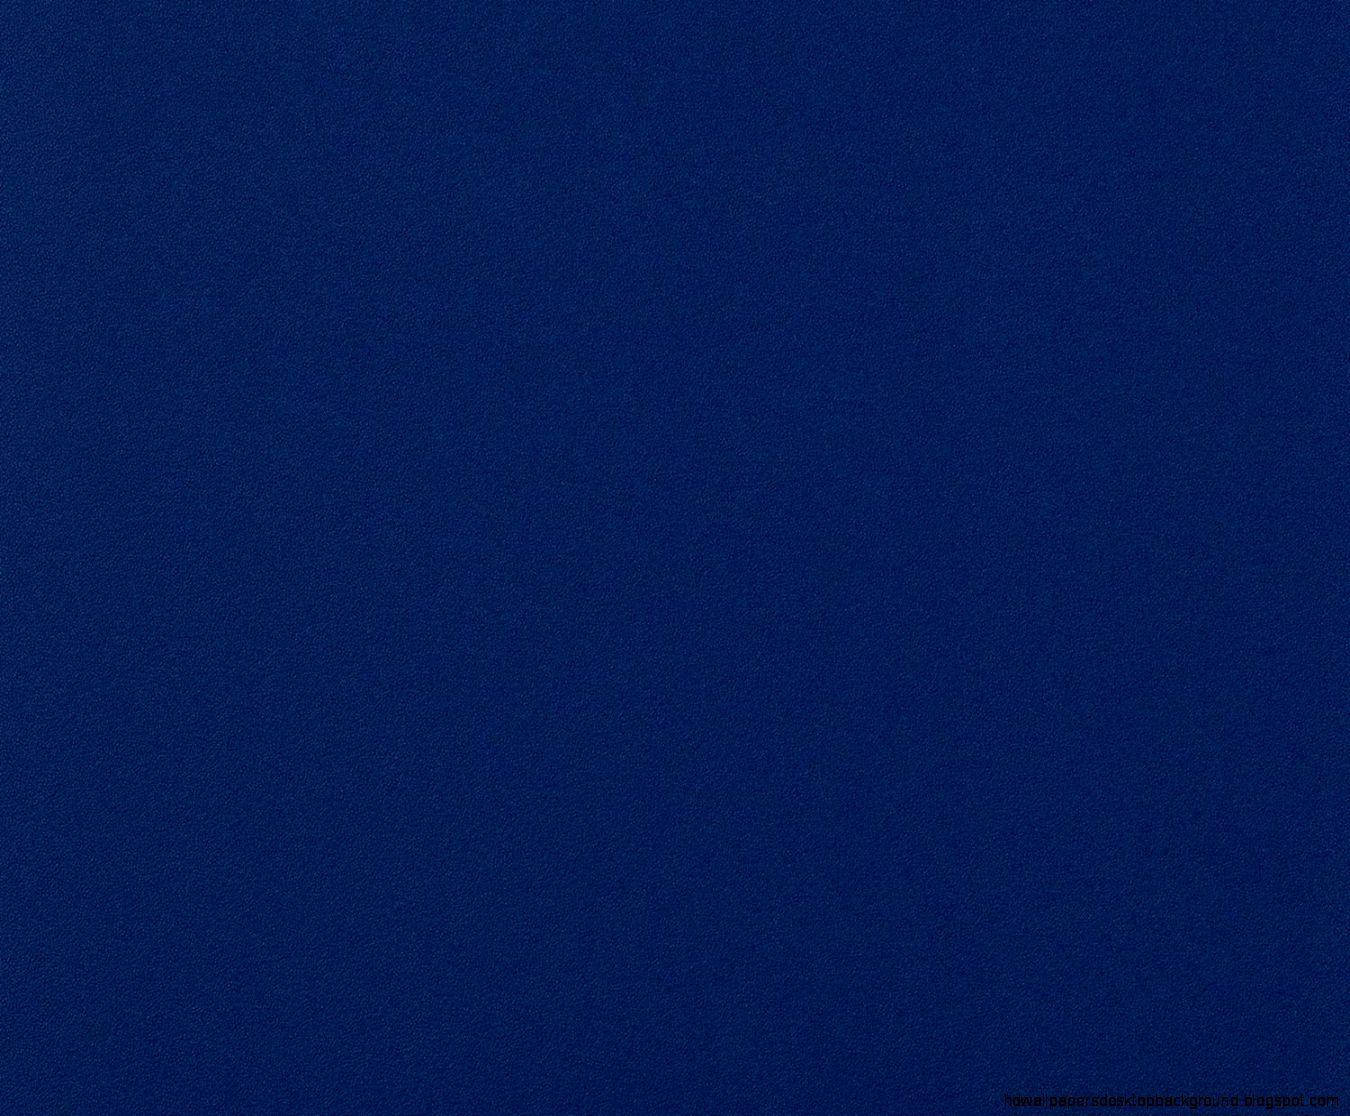 Experience the beauty of a Dark Blue Plain Wallpaper